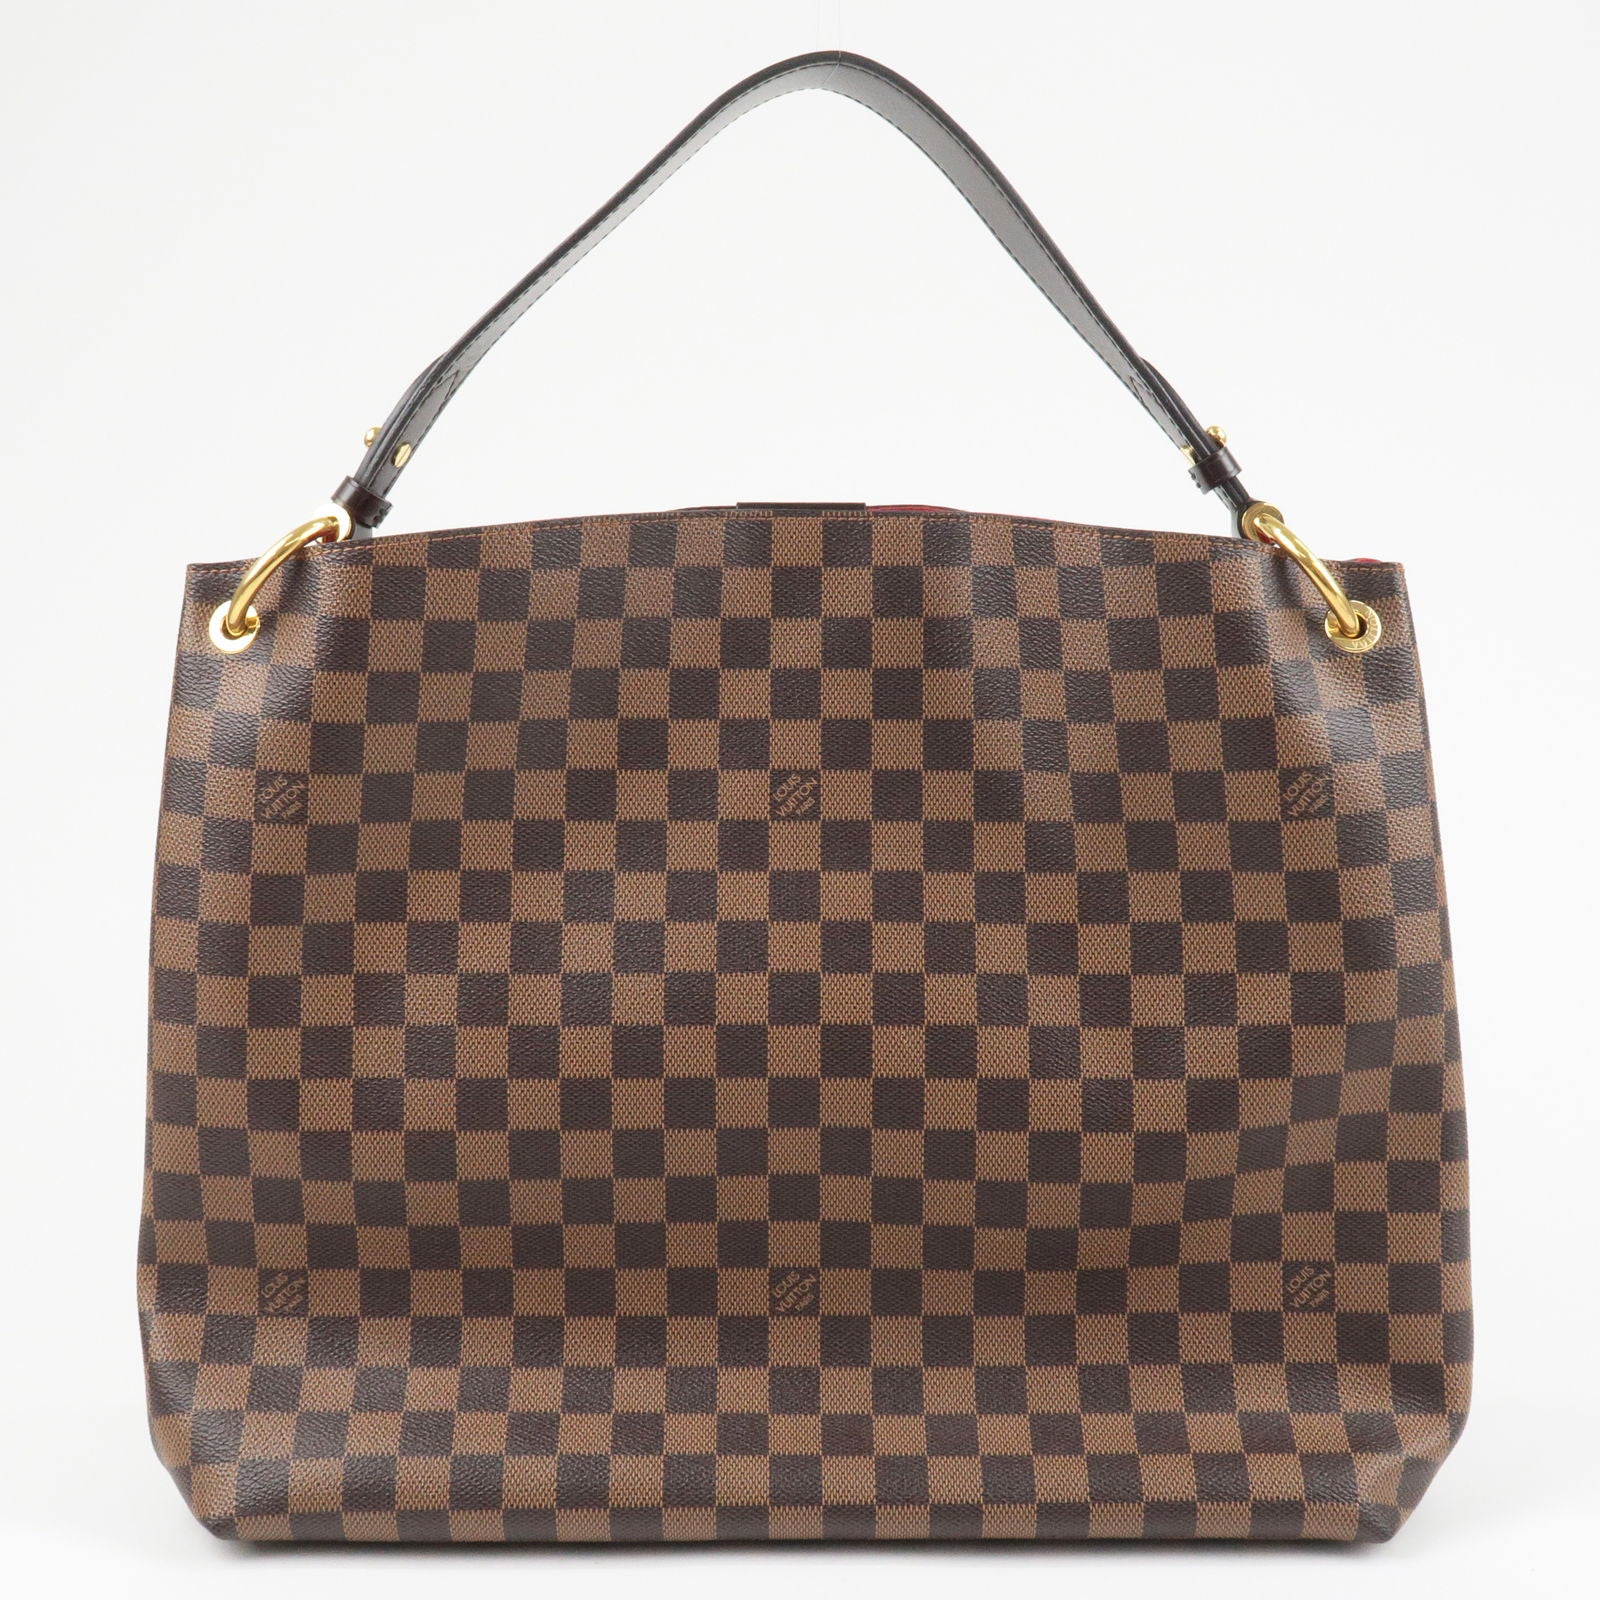 Louis Vuitton Graceful mm Damier Ebene Shoulder Bag Brown